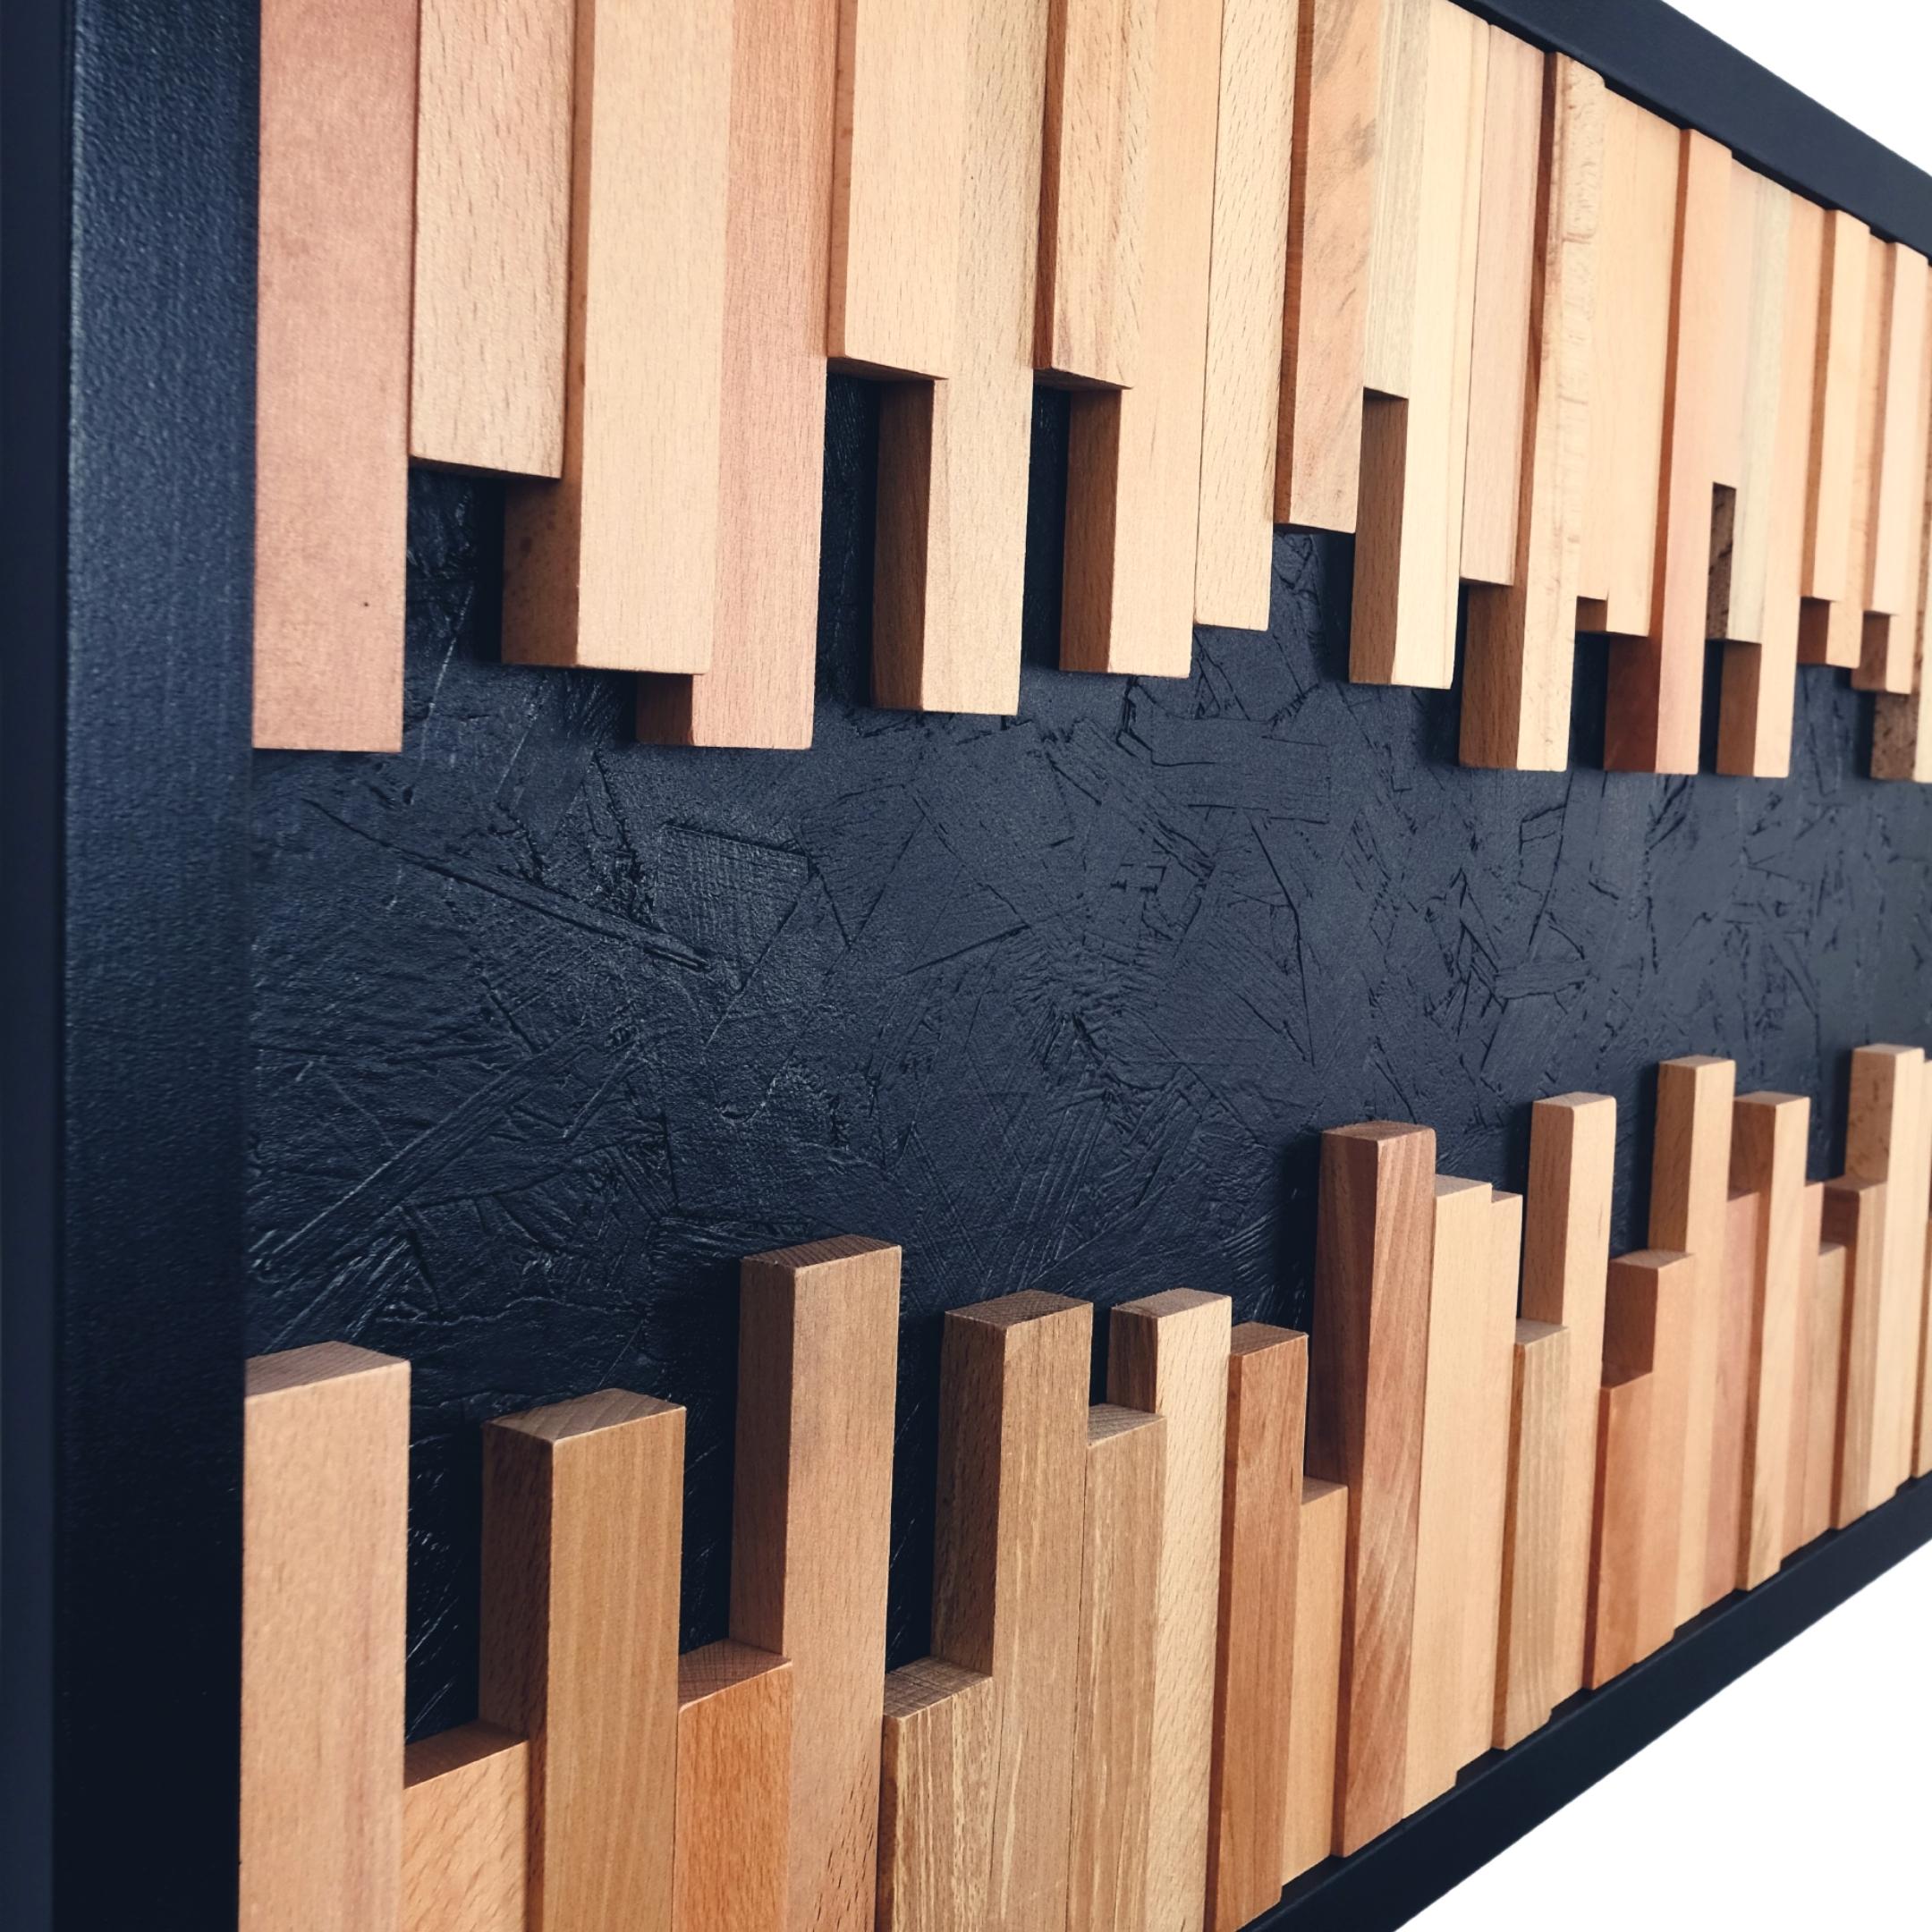 ・"SoundWave"・Premium Wood Handmade Wall Sculpture - Limited Edition